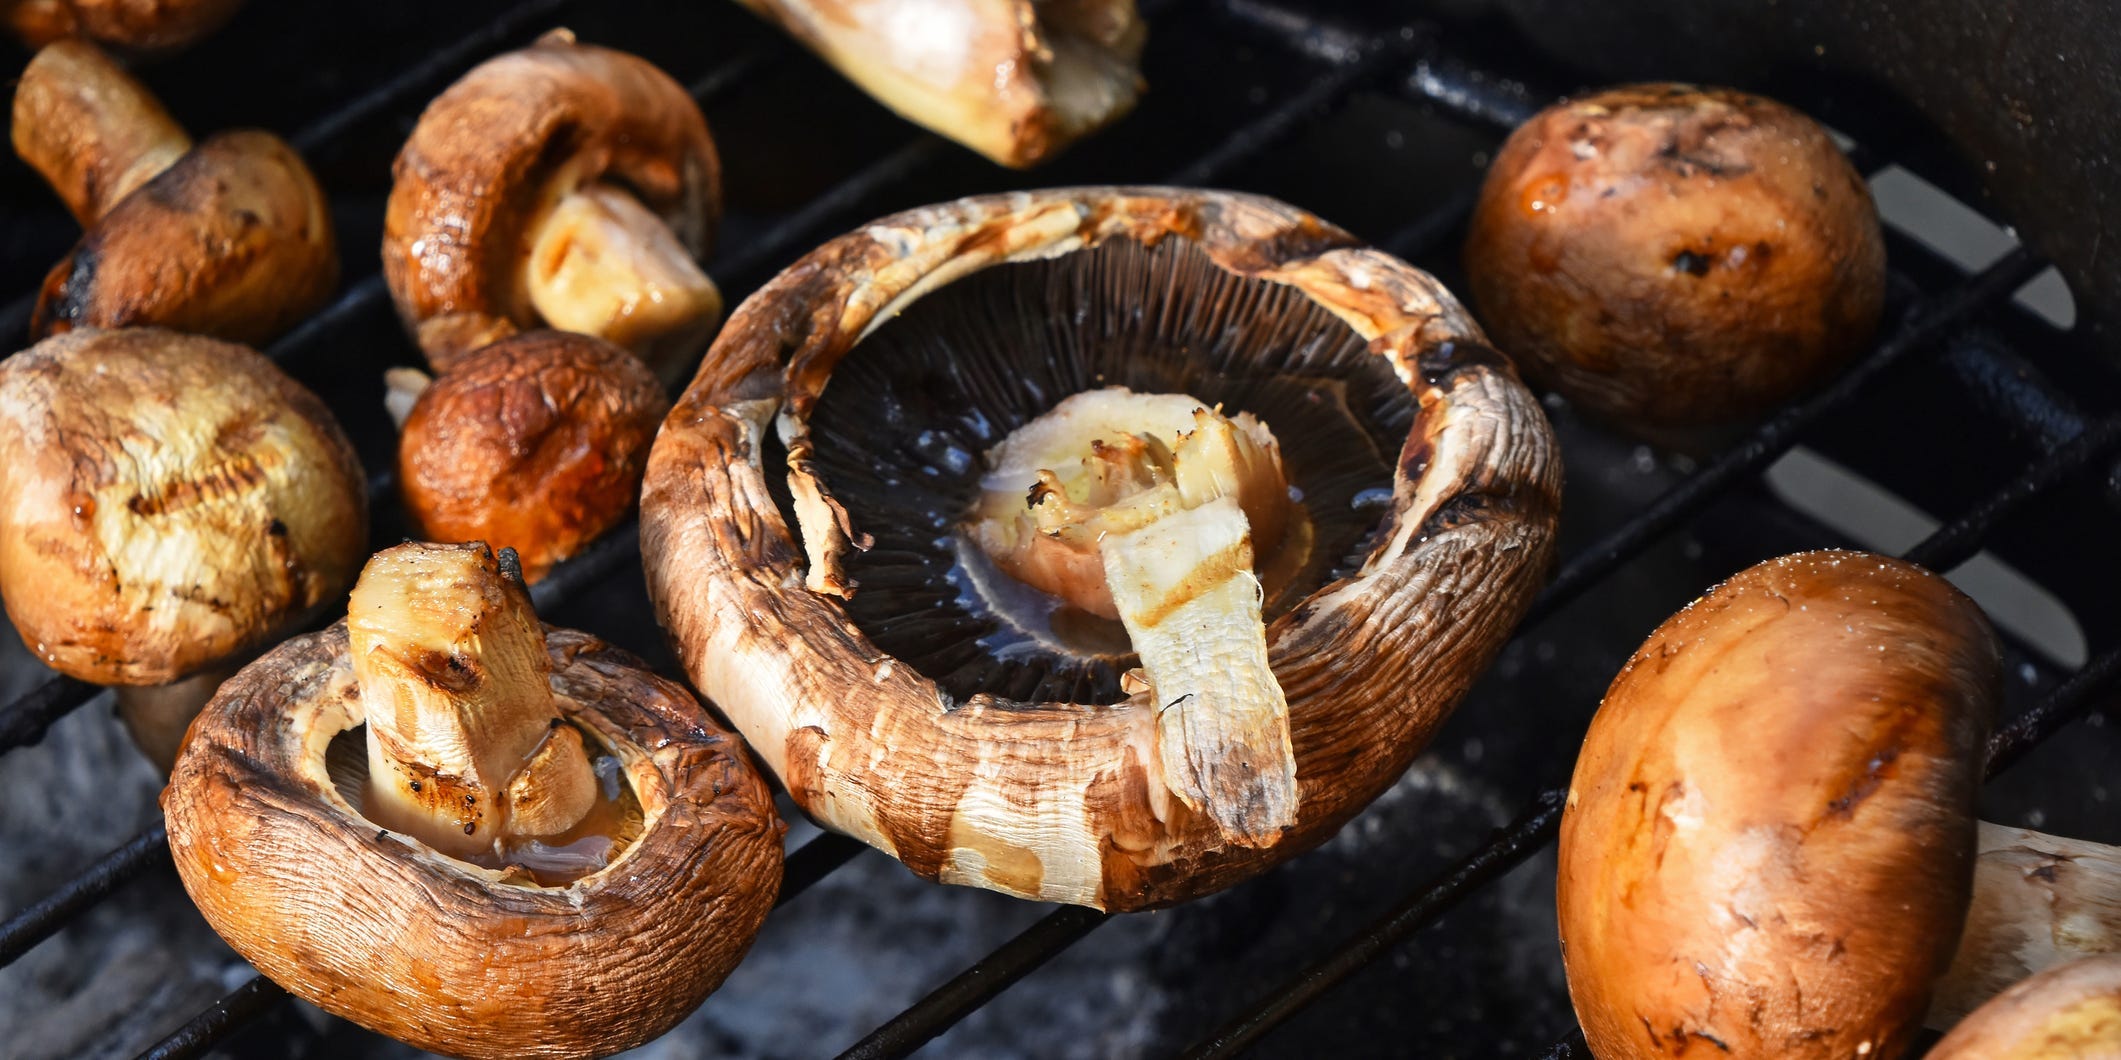 Grilled mushrooms